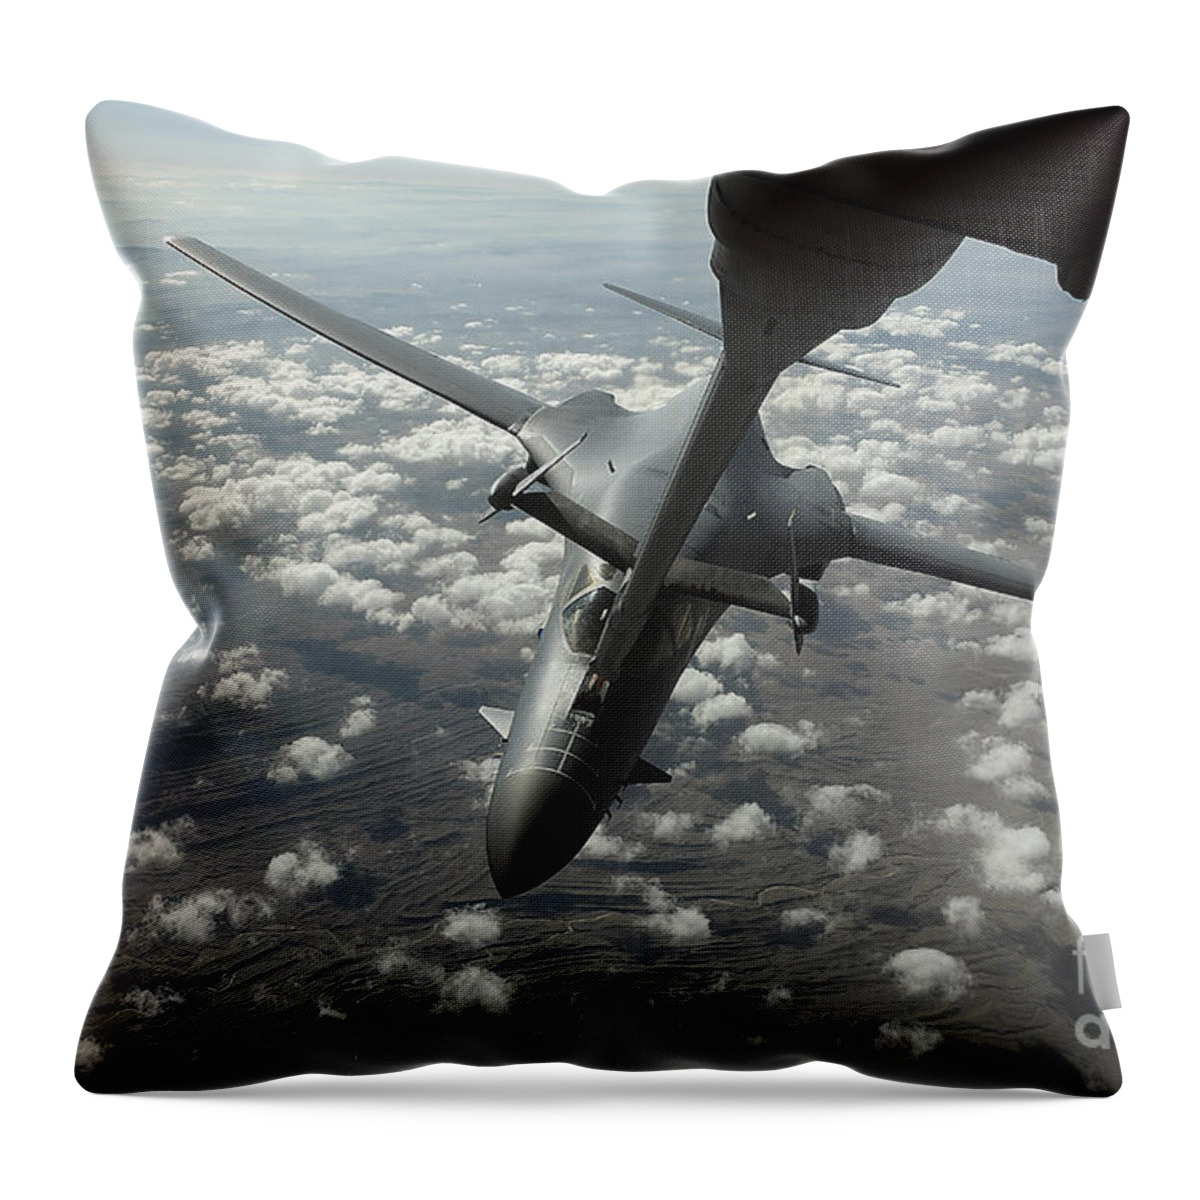 In-flight Throw Pillow featuring the photograph A U.s. Air Force Kc-10 Refuels A B-1b by Stocktrek Images